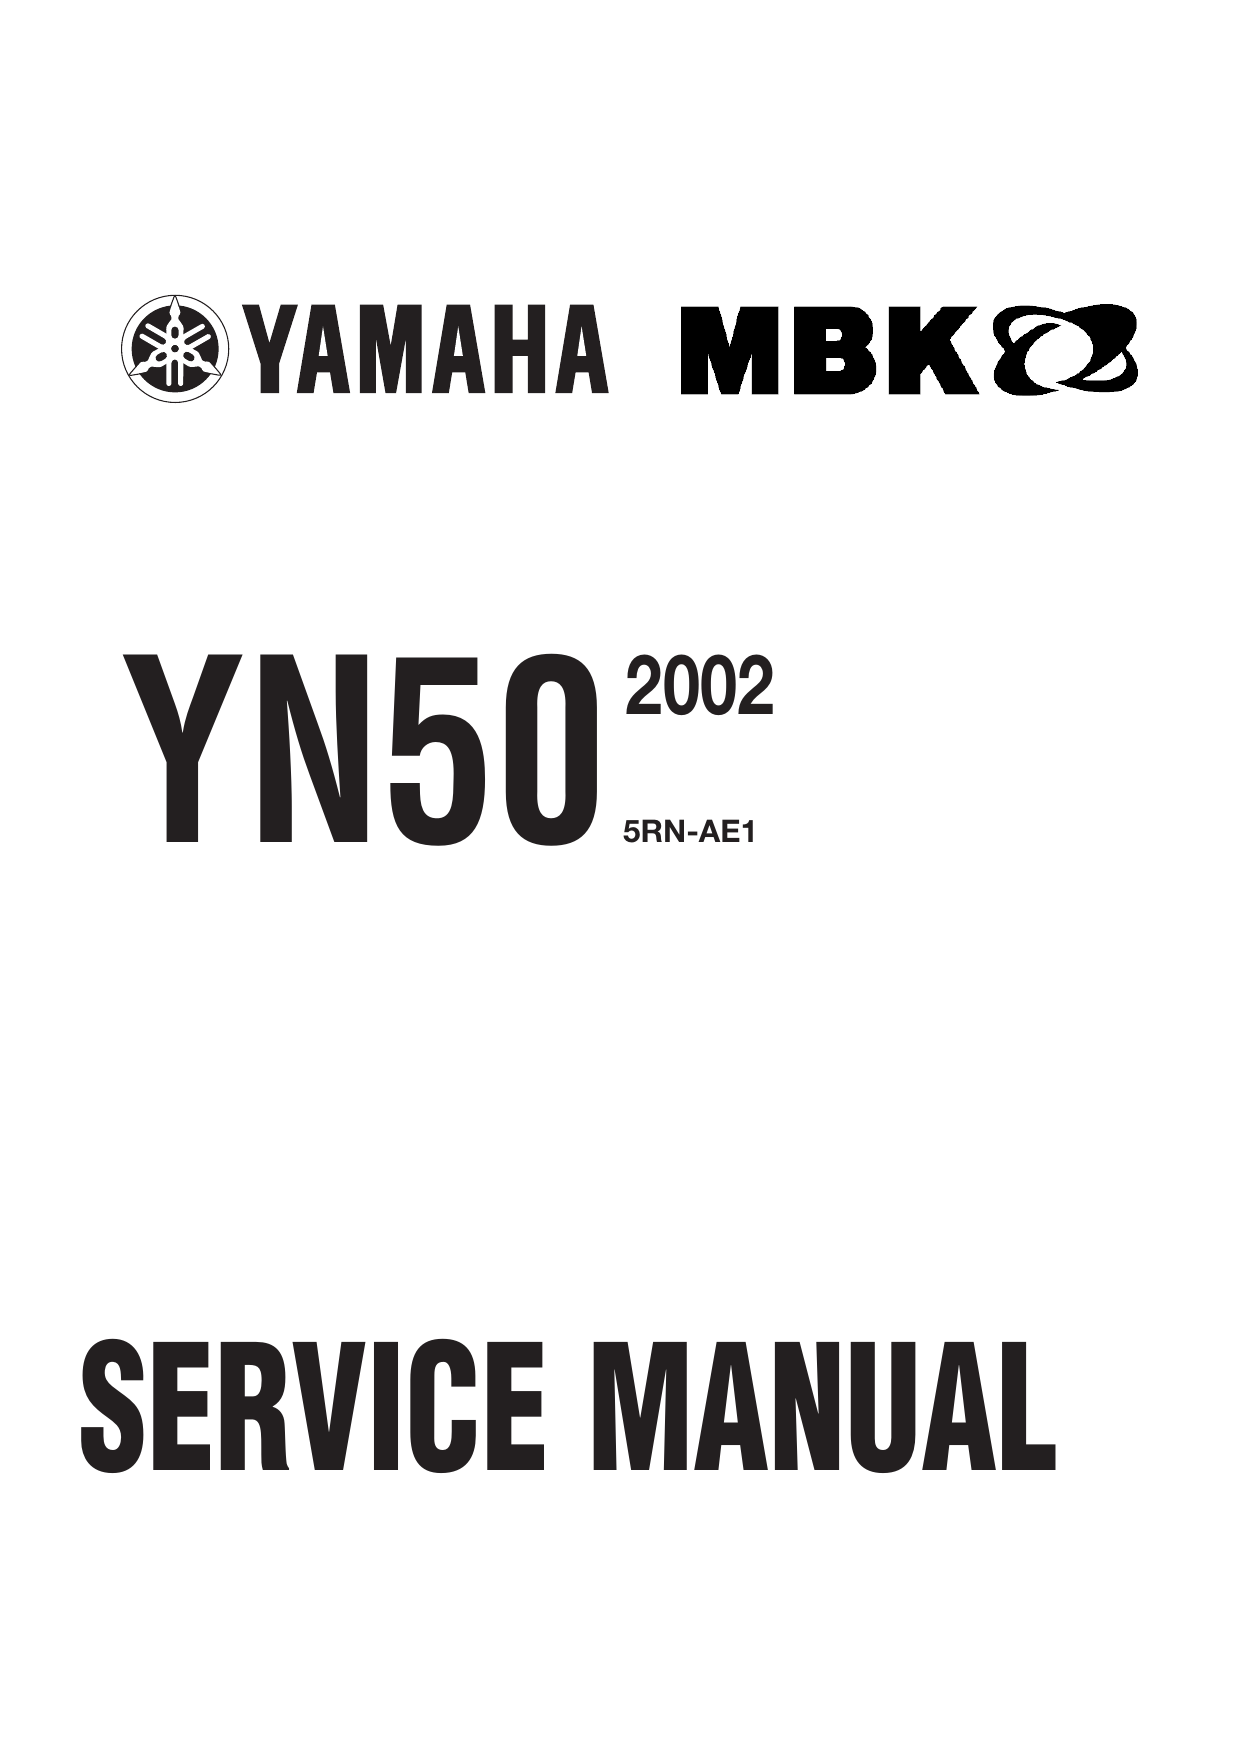 2002 Yamaha Neos YN50 service manual Preview image 1